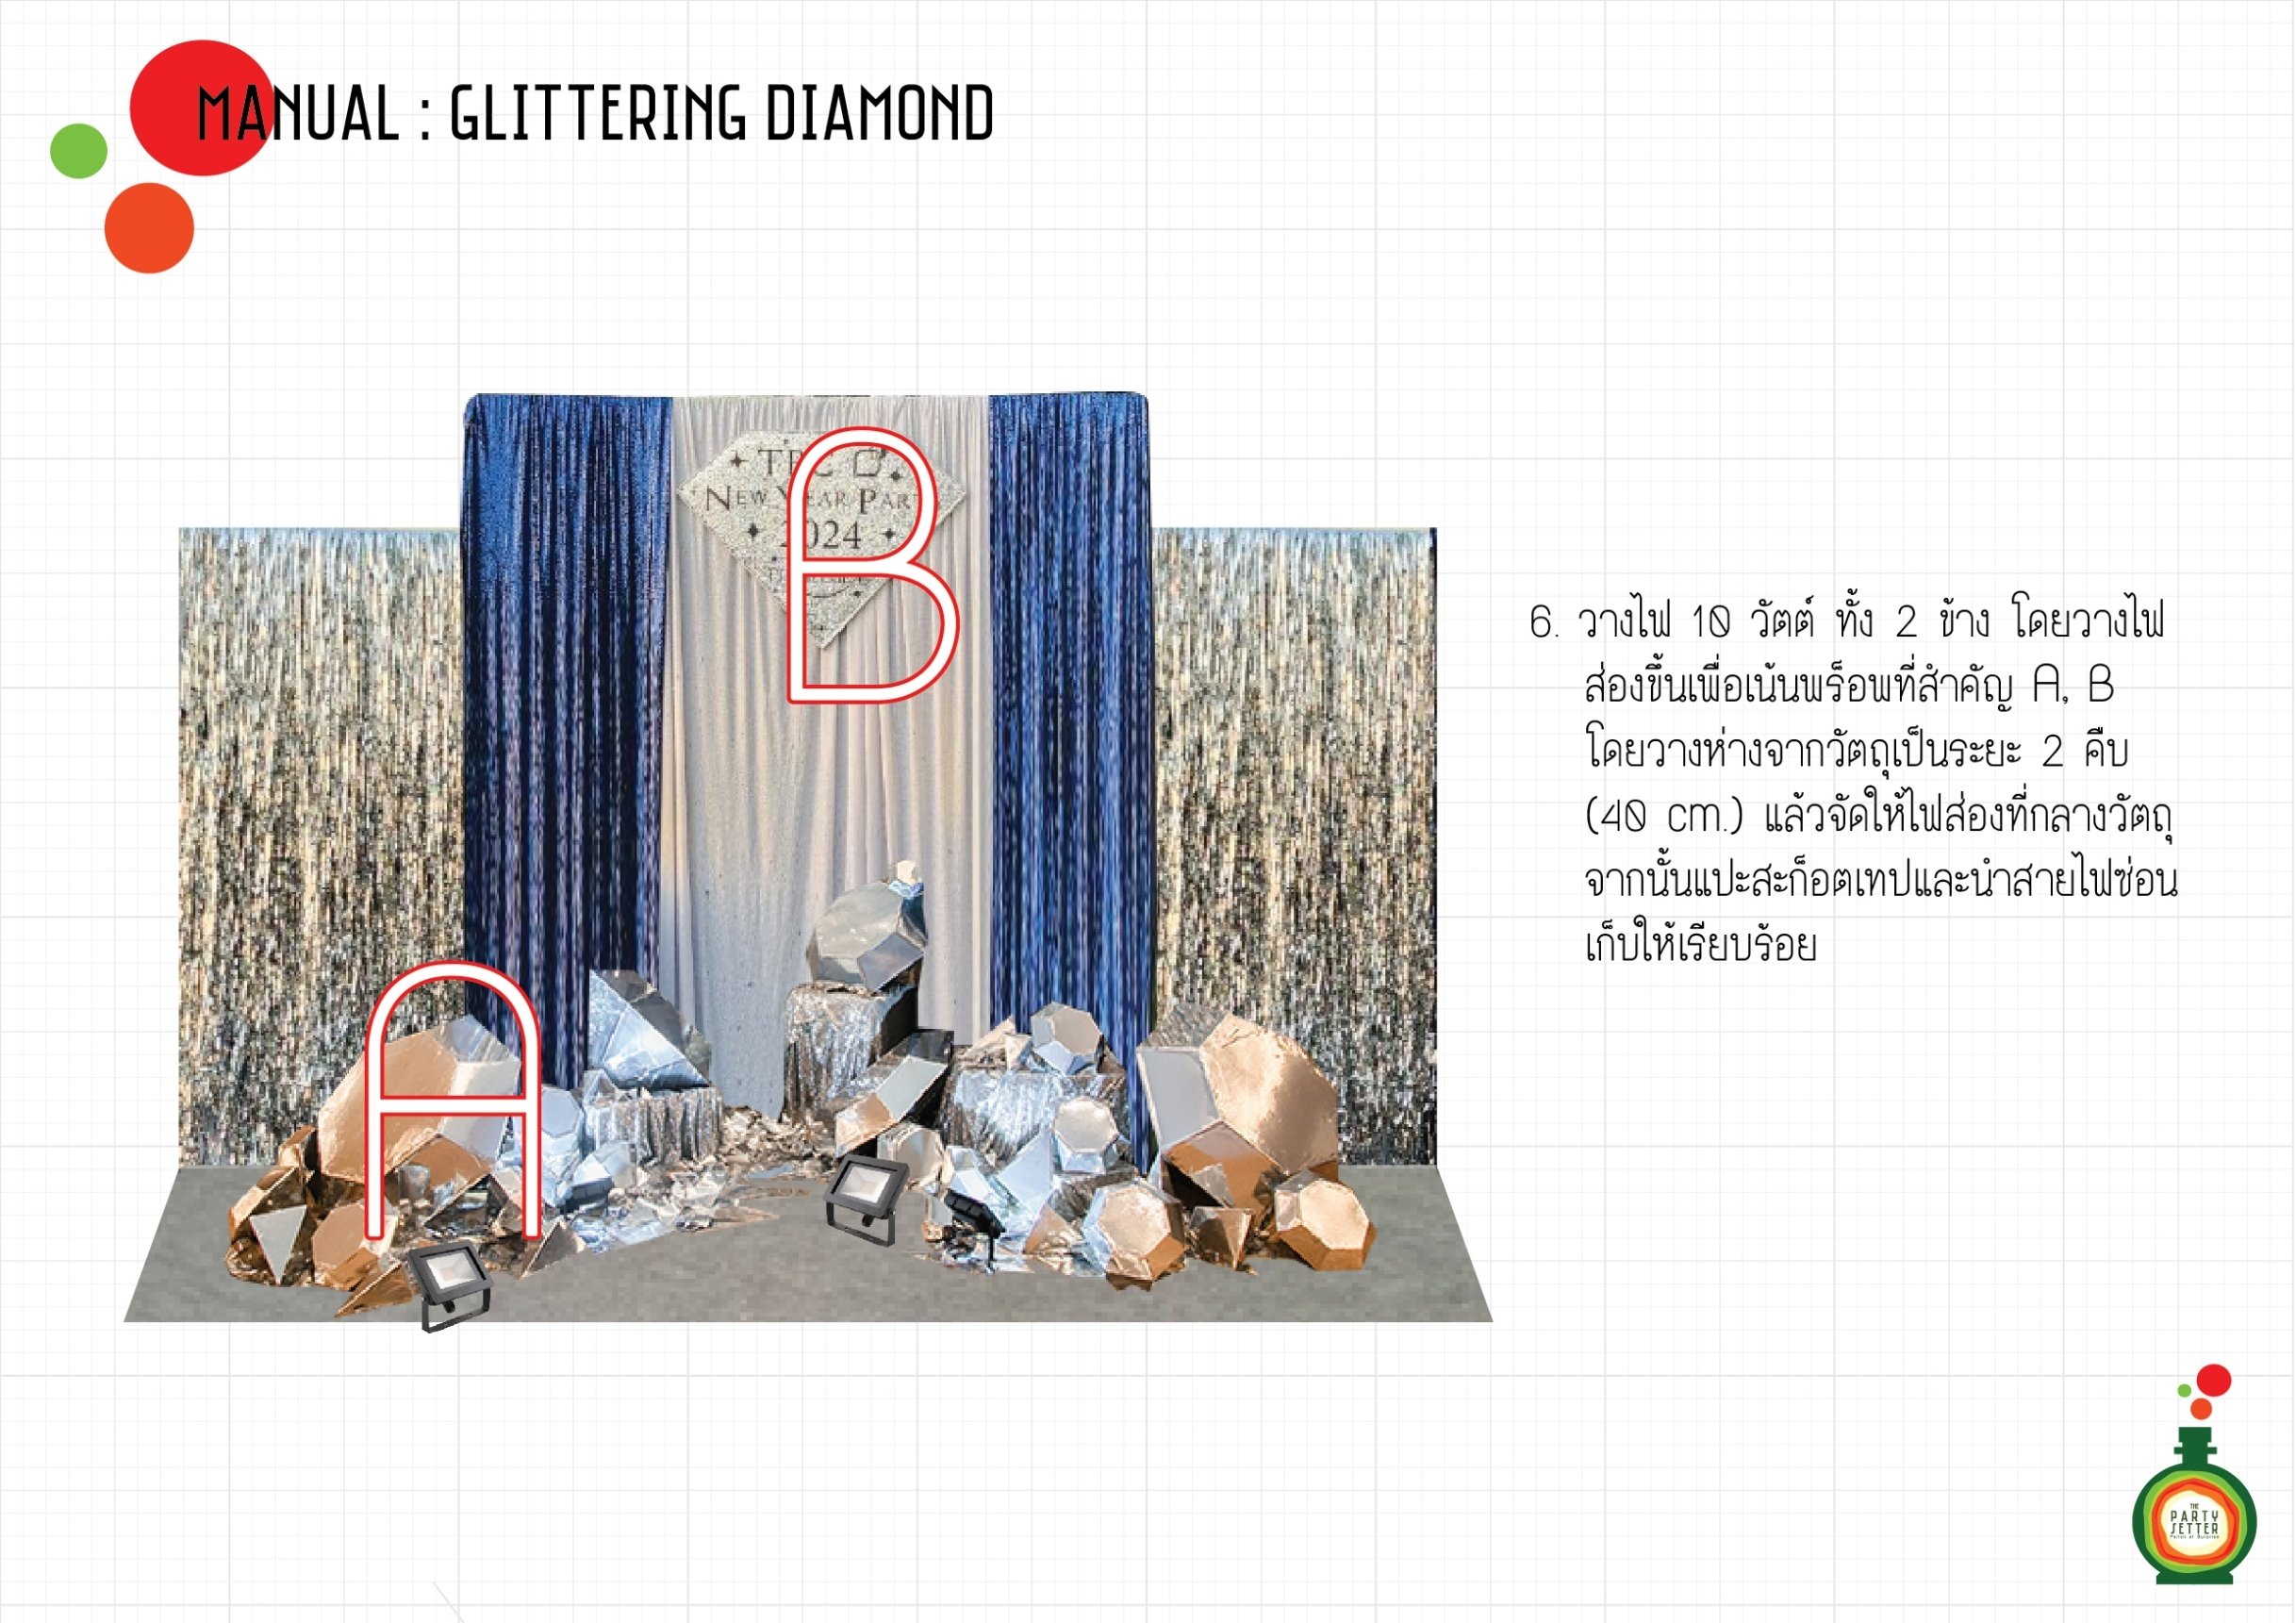 Manual_Glittering Diamond-06-01.jpg